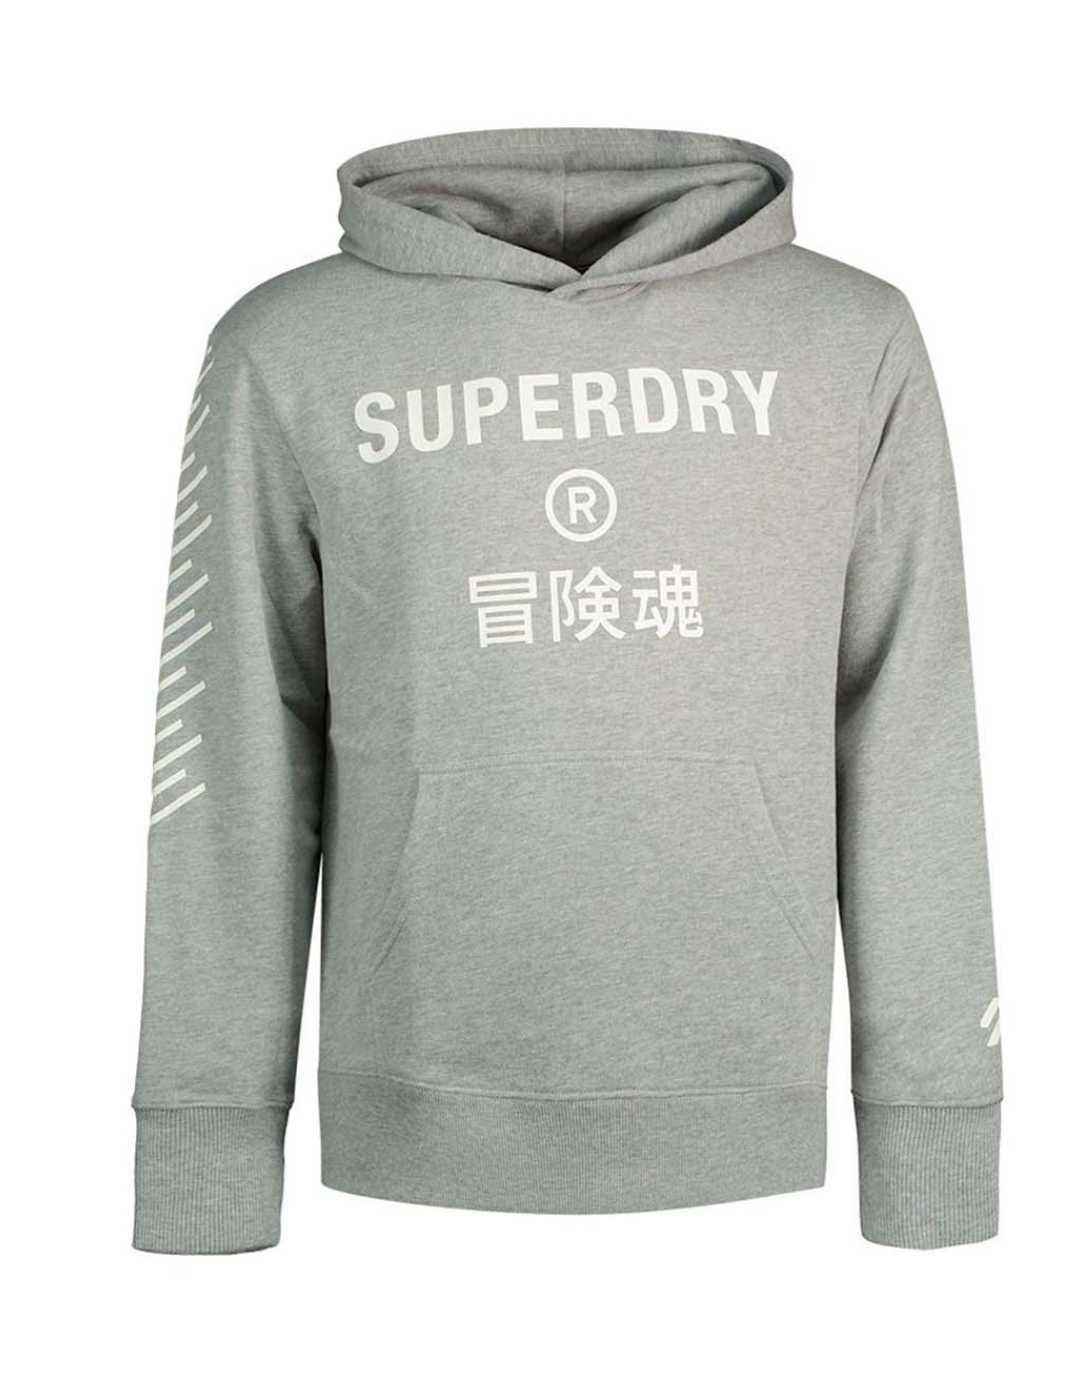 Sudadera Superdry Core sport gris para hombre -a